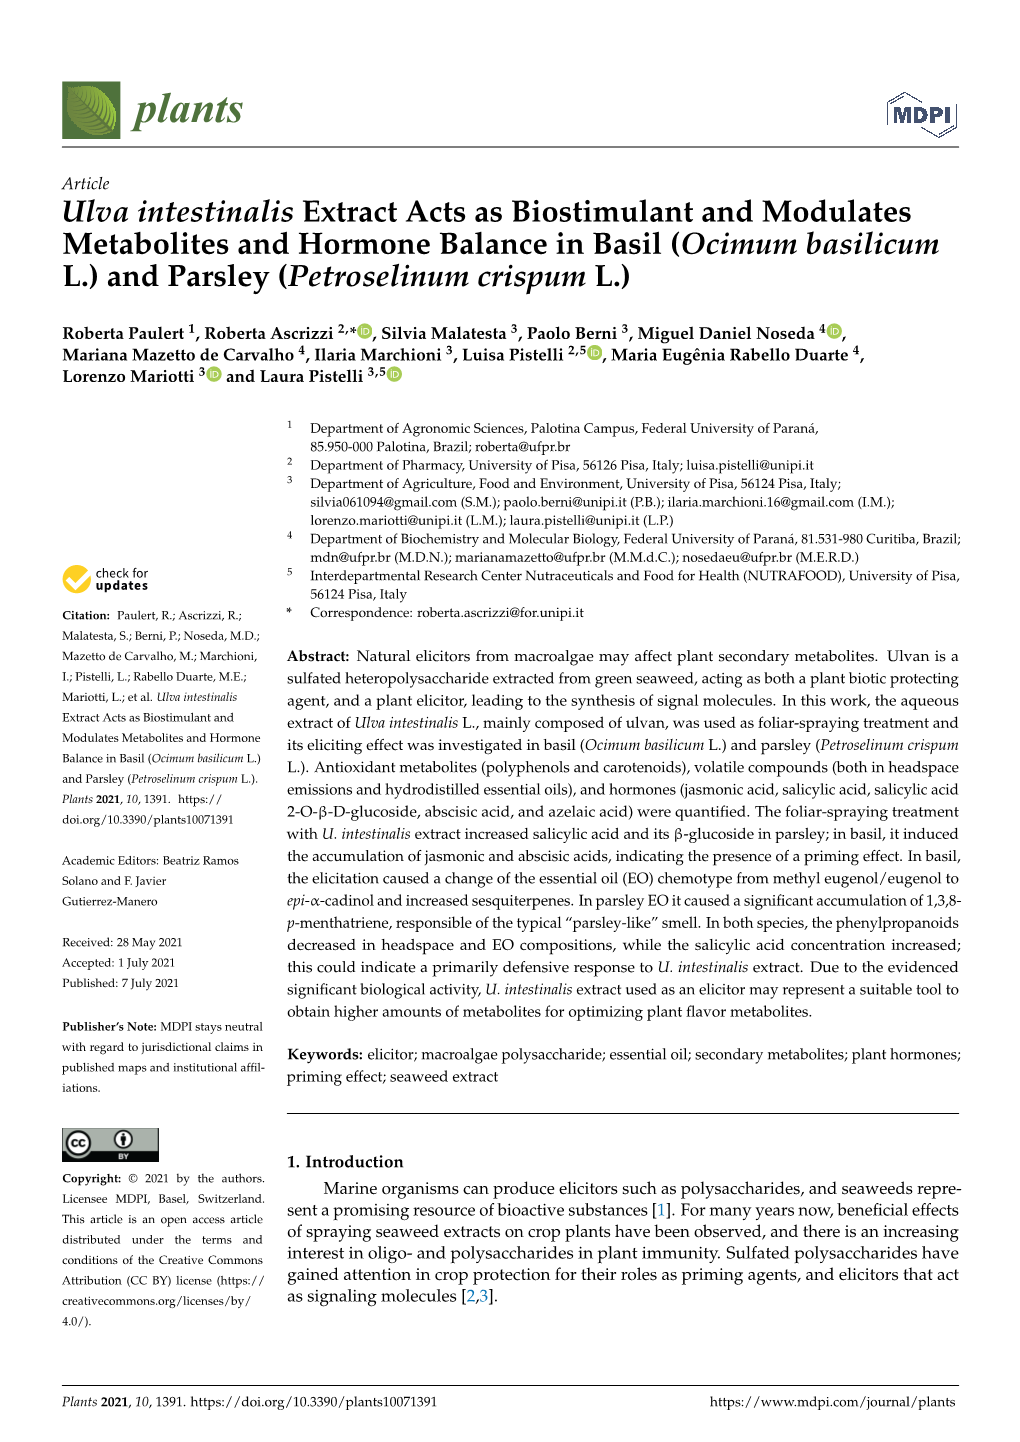 Ulva Intestinalis Extract Acts As Biostimulant and Modulates Metabolites and Hormone Balance in Basil (Ocimum Basilicum L.) and Parsley (Petroselinum Crispum L.)